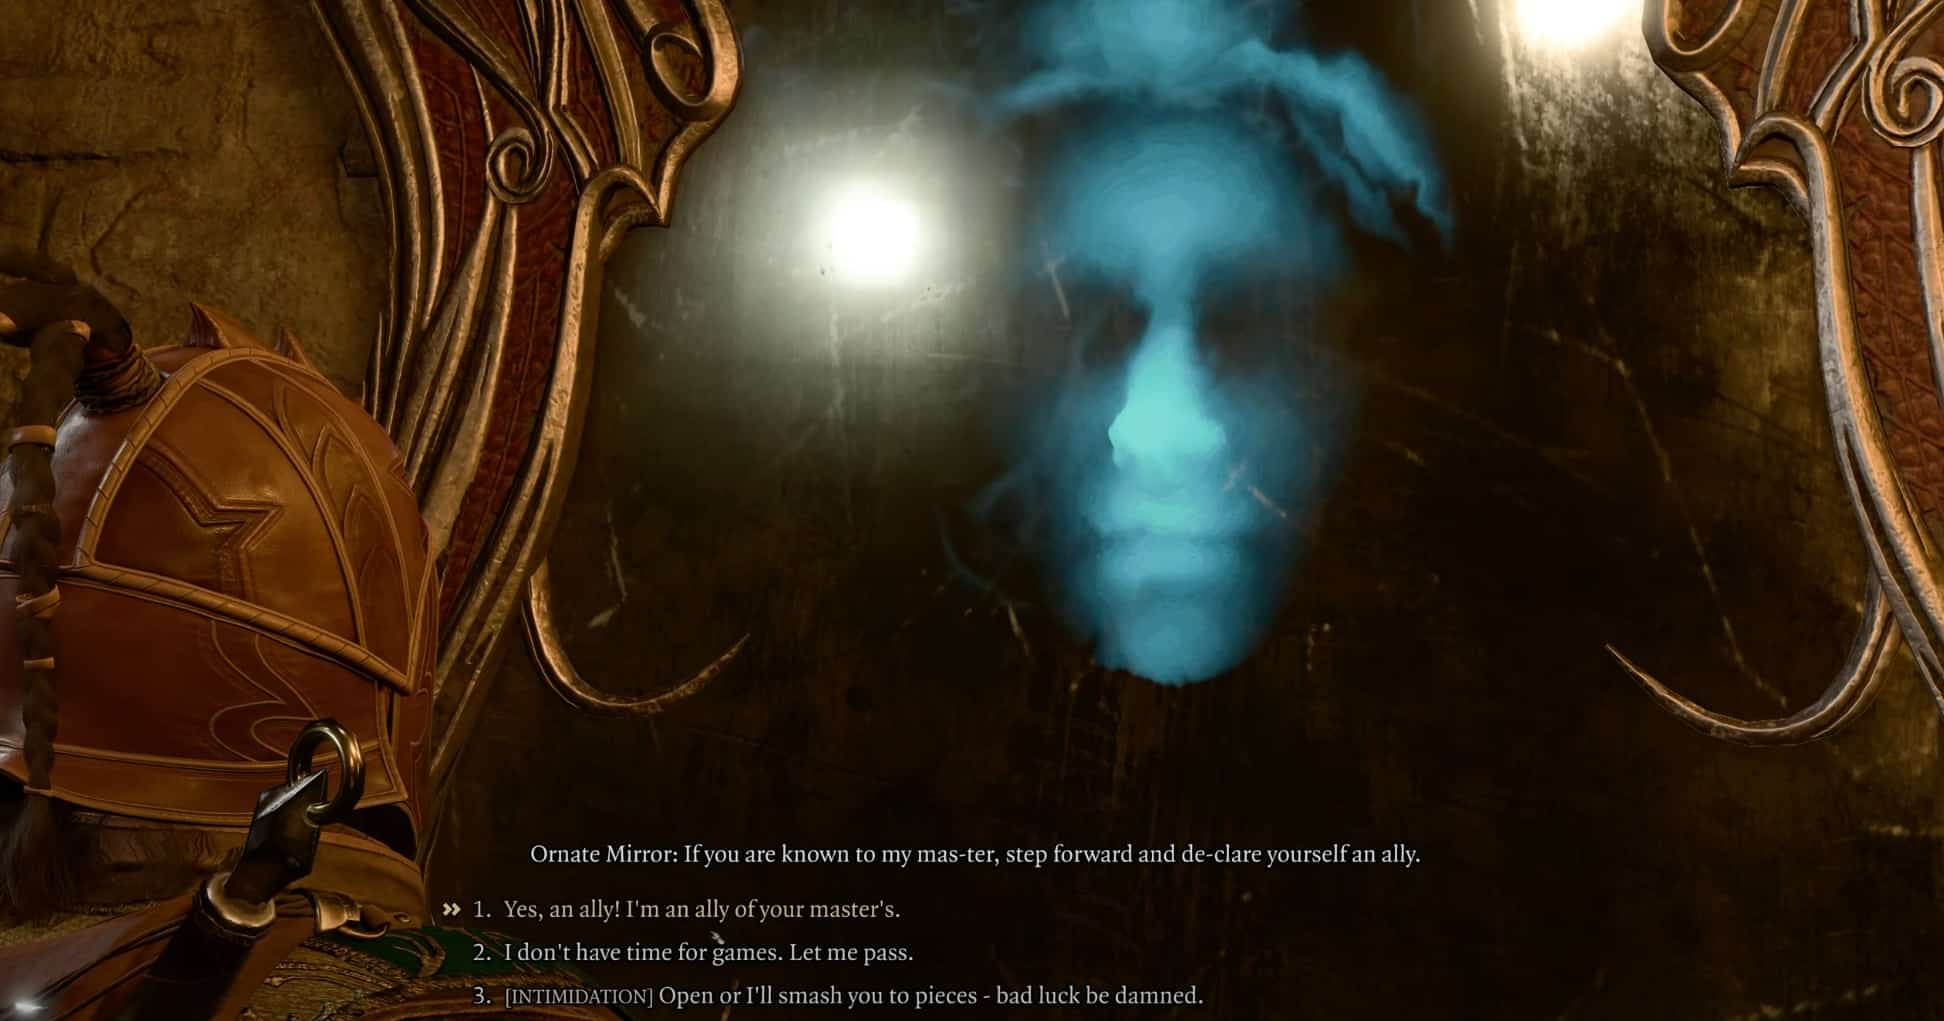 Baldur's Gate 3 Ornate Mirror Answers To Open The Secret Cellar Door